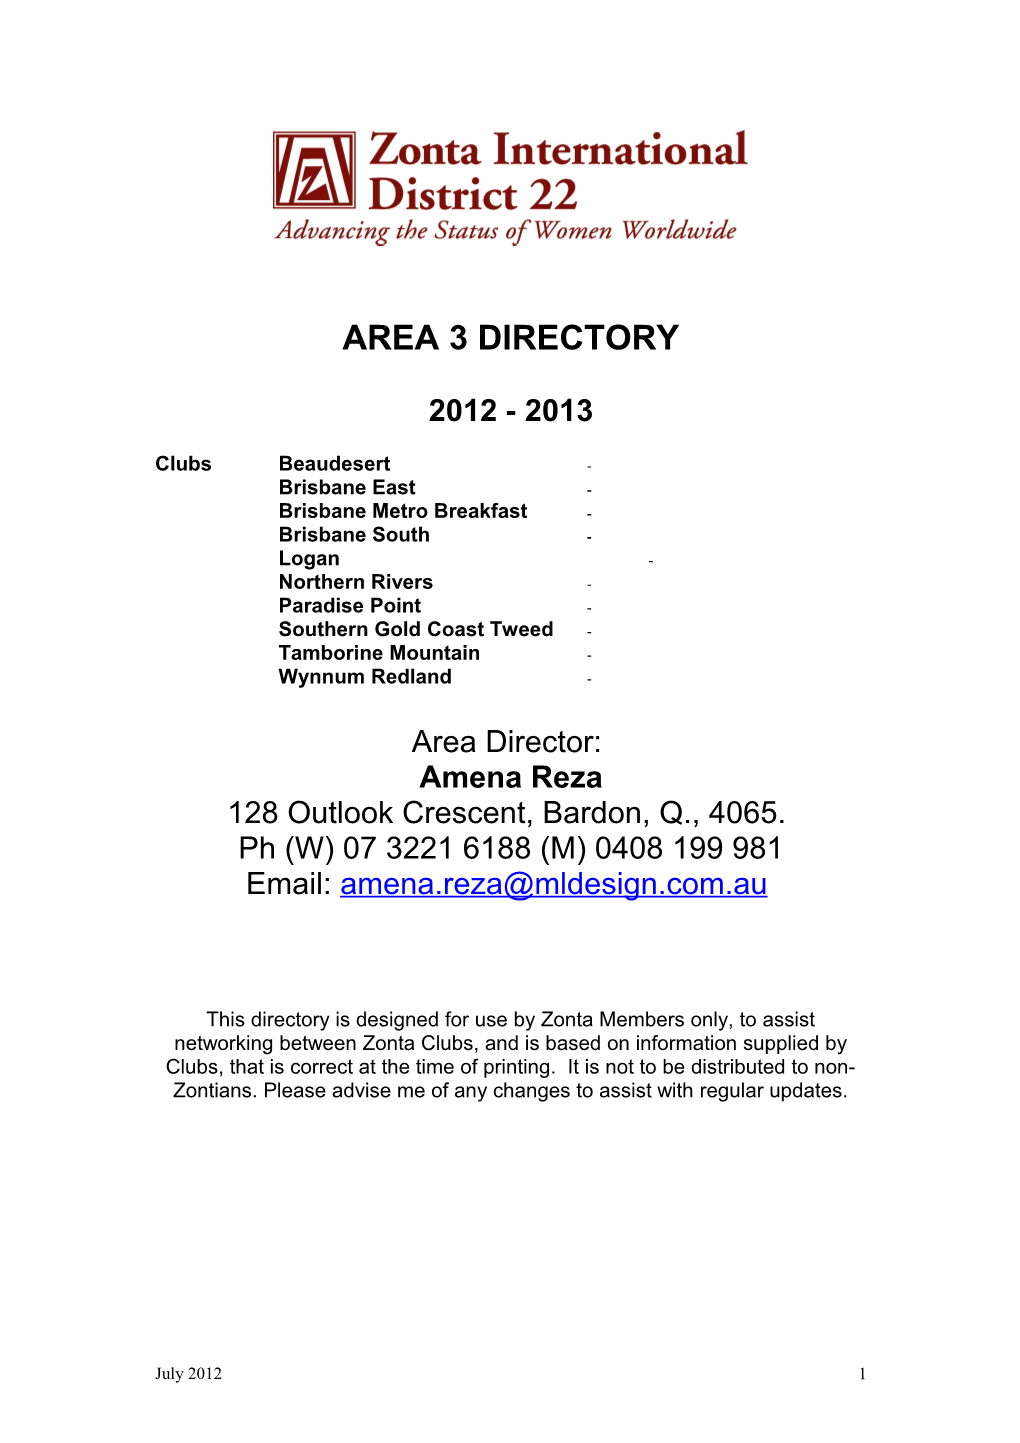 Area 3 Directory